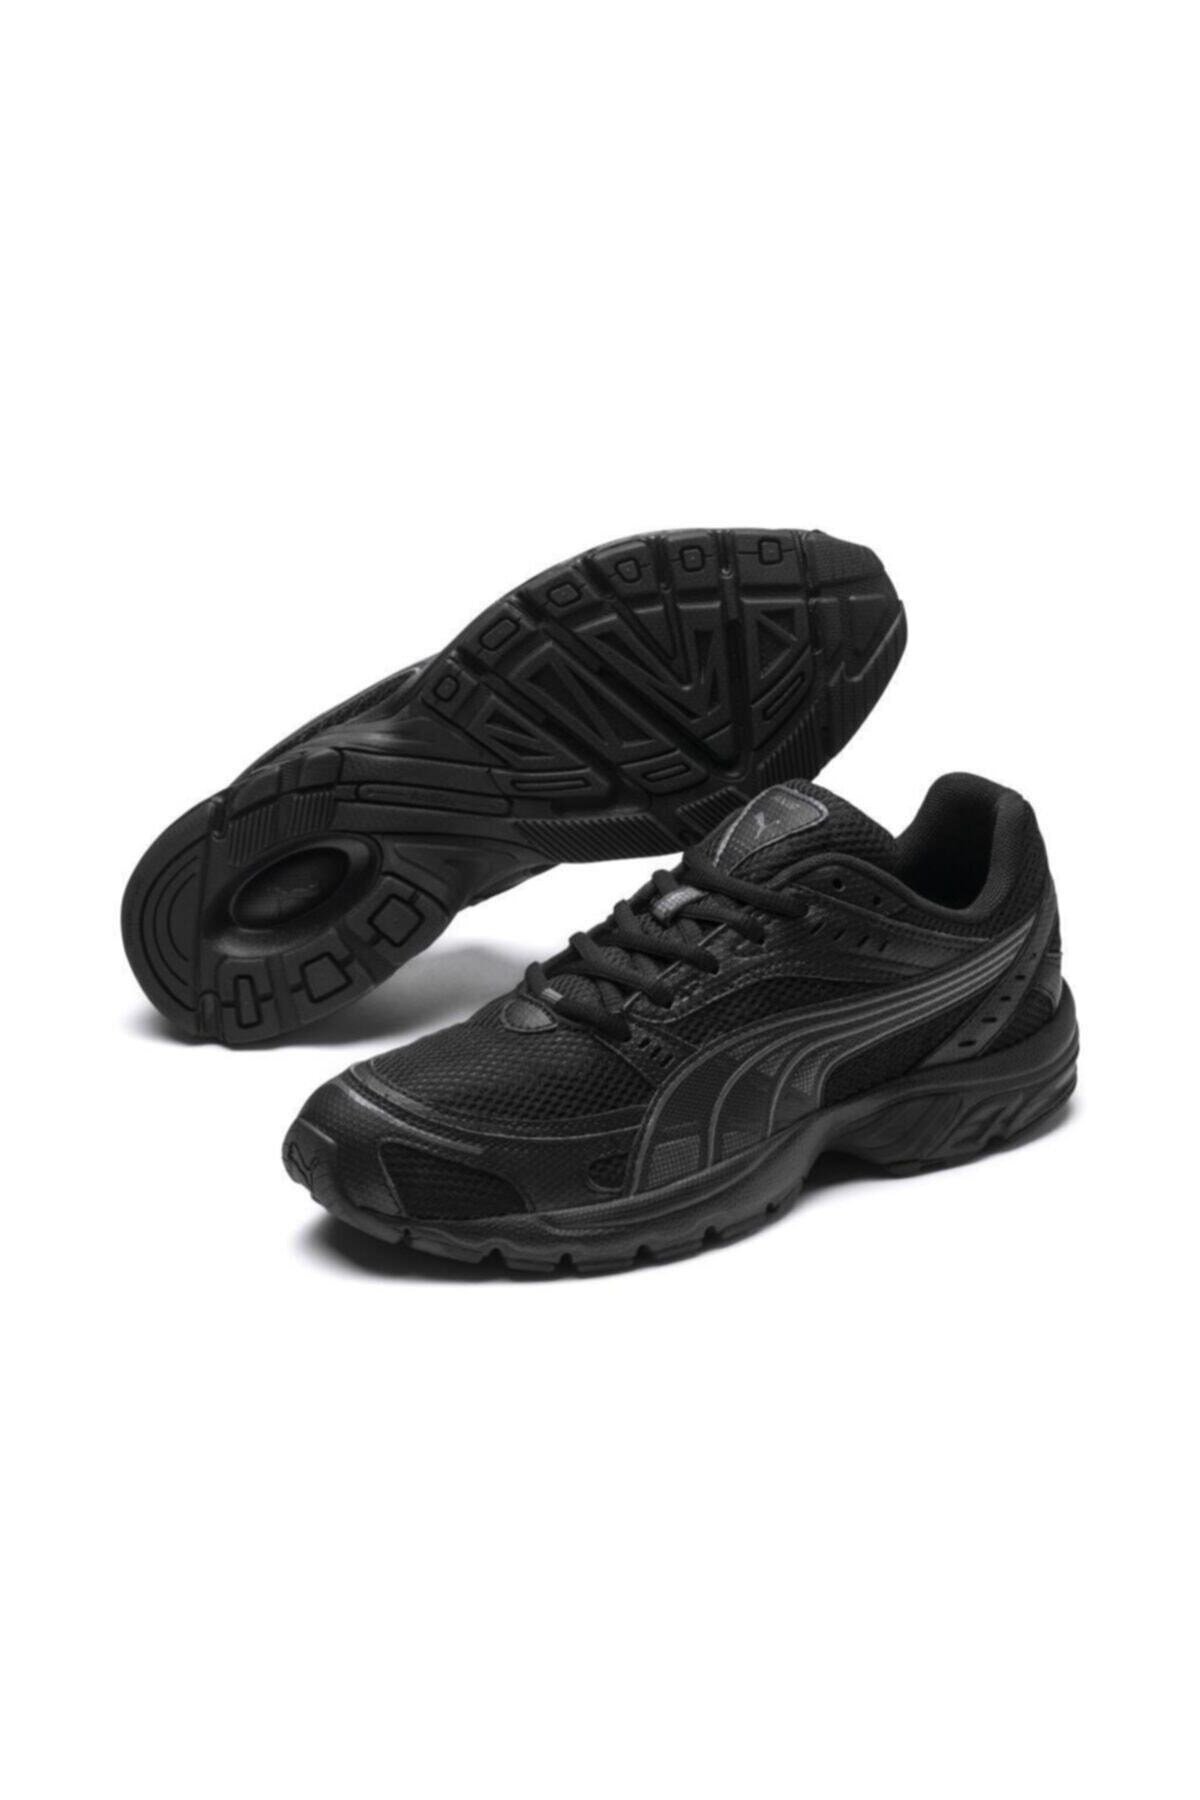 Puma Axis Siyah Erkek Spor Ayakkabı 368465-01 v1